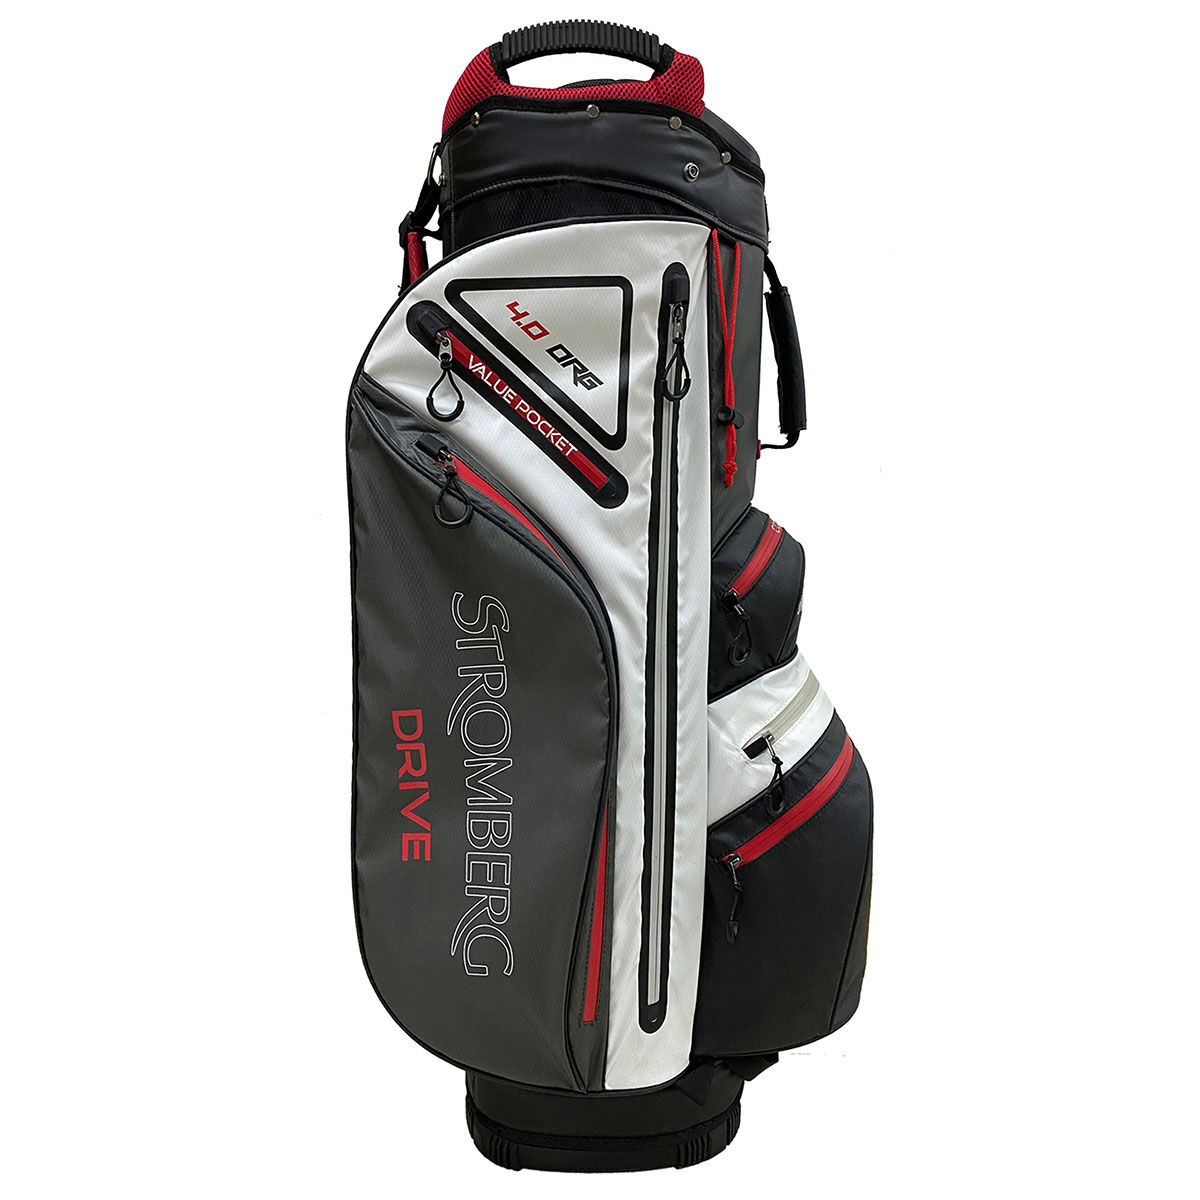 Stromberg Drive Organiser 4.0 Waterproof Golf Cart Bag, Black/ white/ red, One Size | American Golf